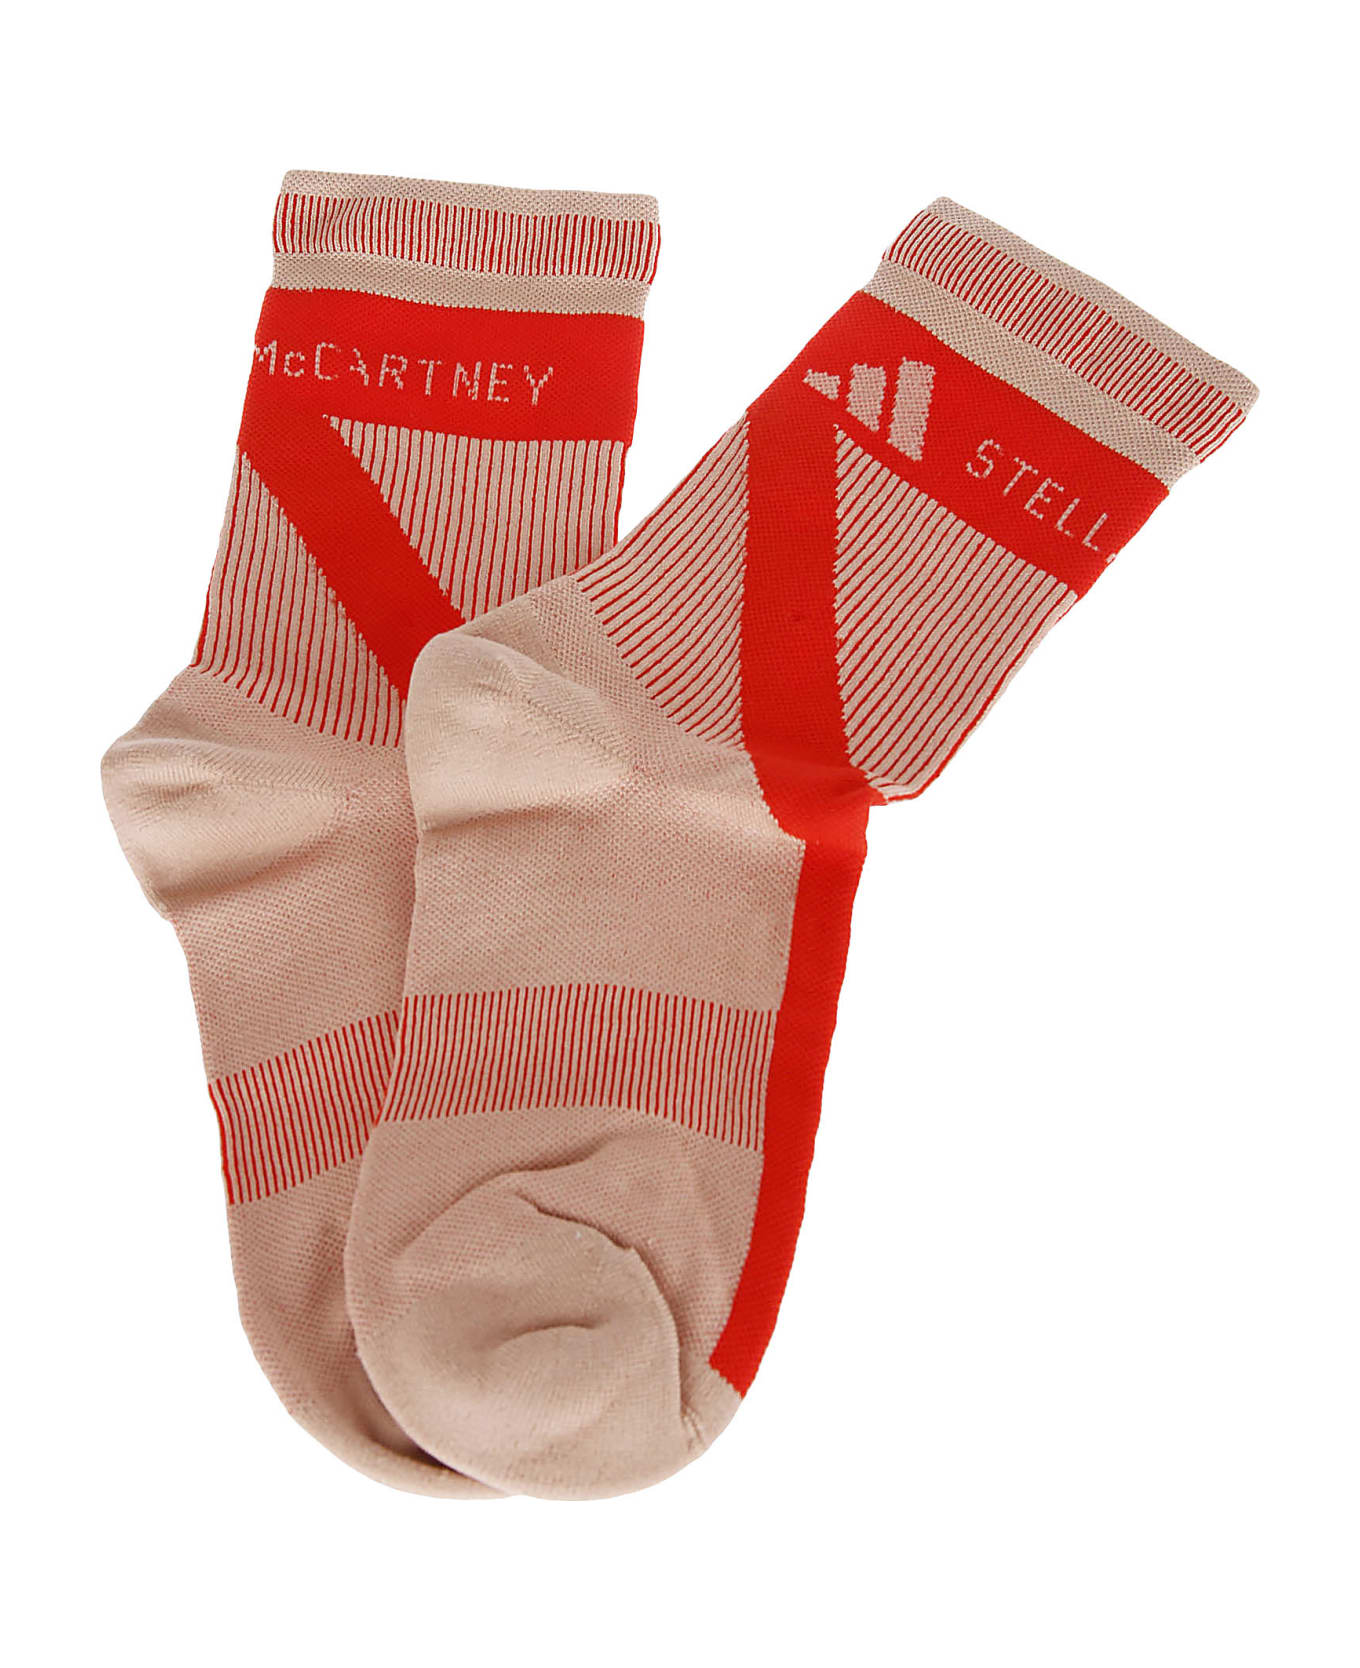 Adidas by Stella McCartney #n# Crew Socks - SALMOND/ACTIVE RED